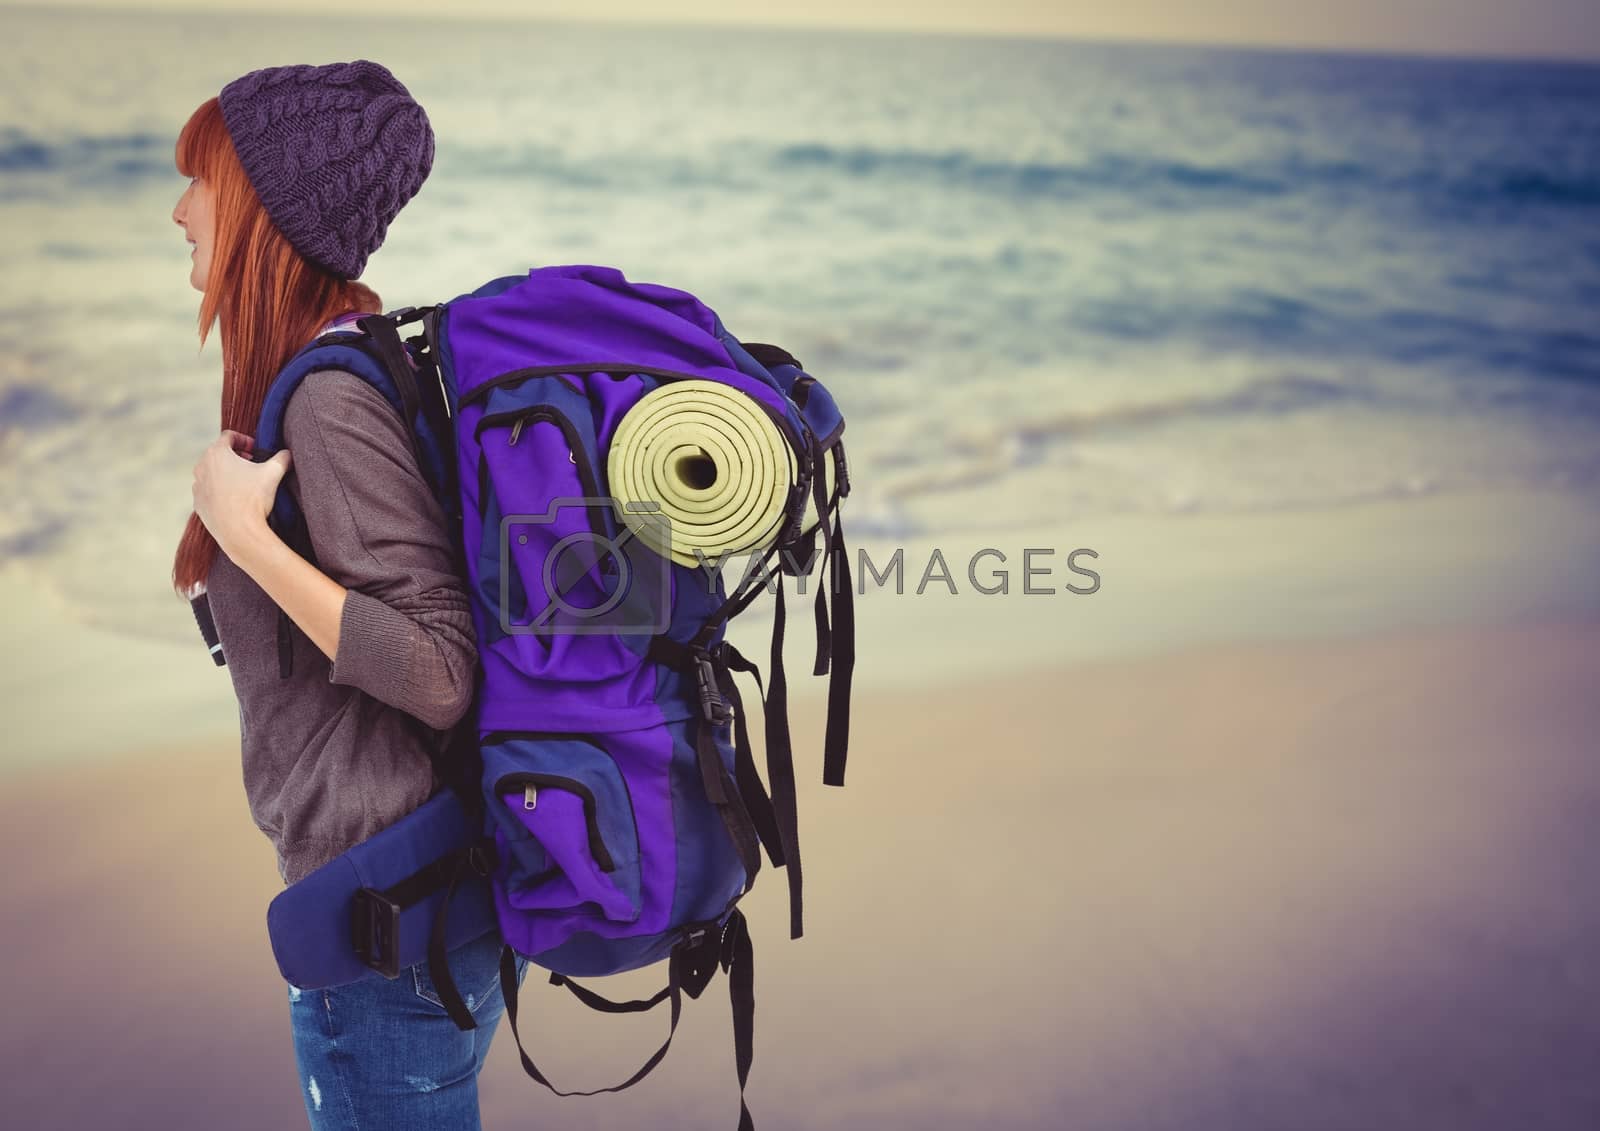 Royalty free image of Millennial backpacker on blurry beach by Wavebreakmedia